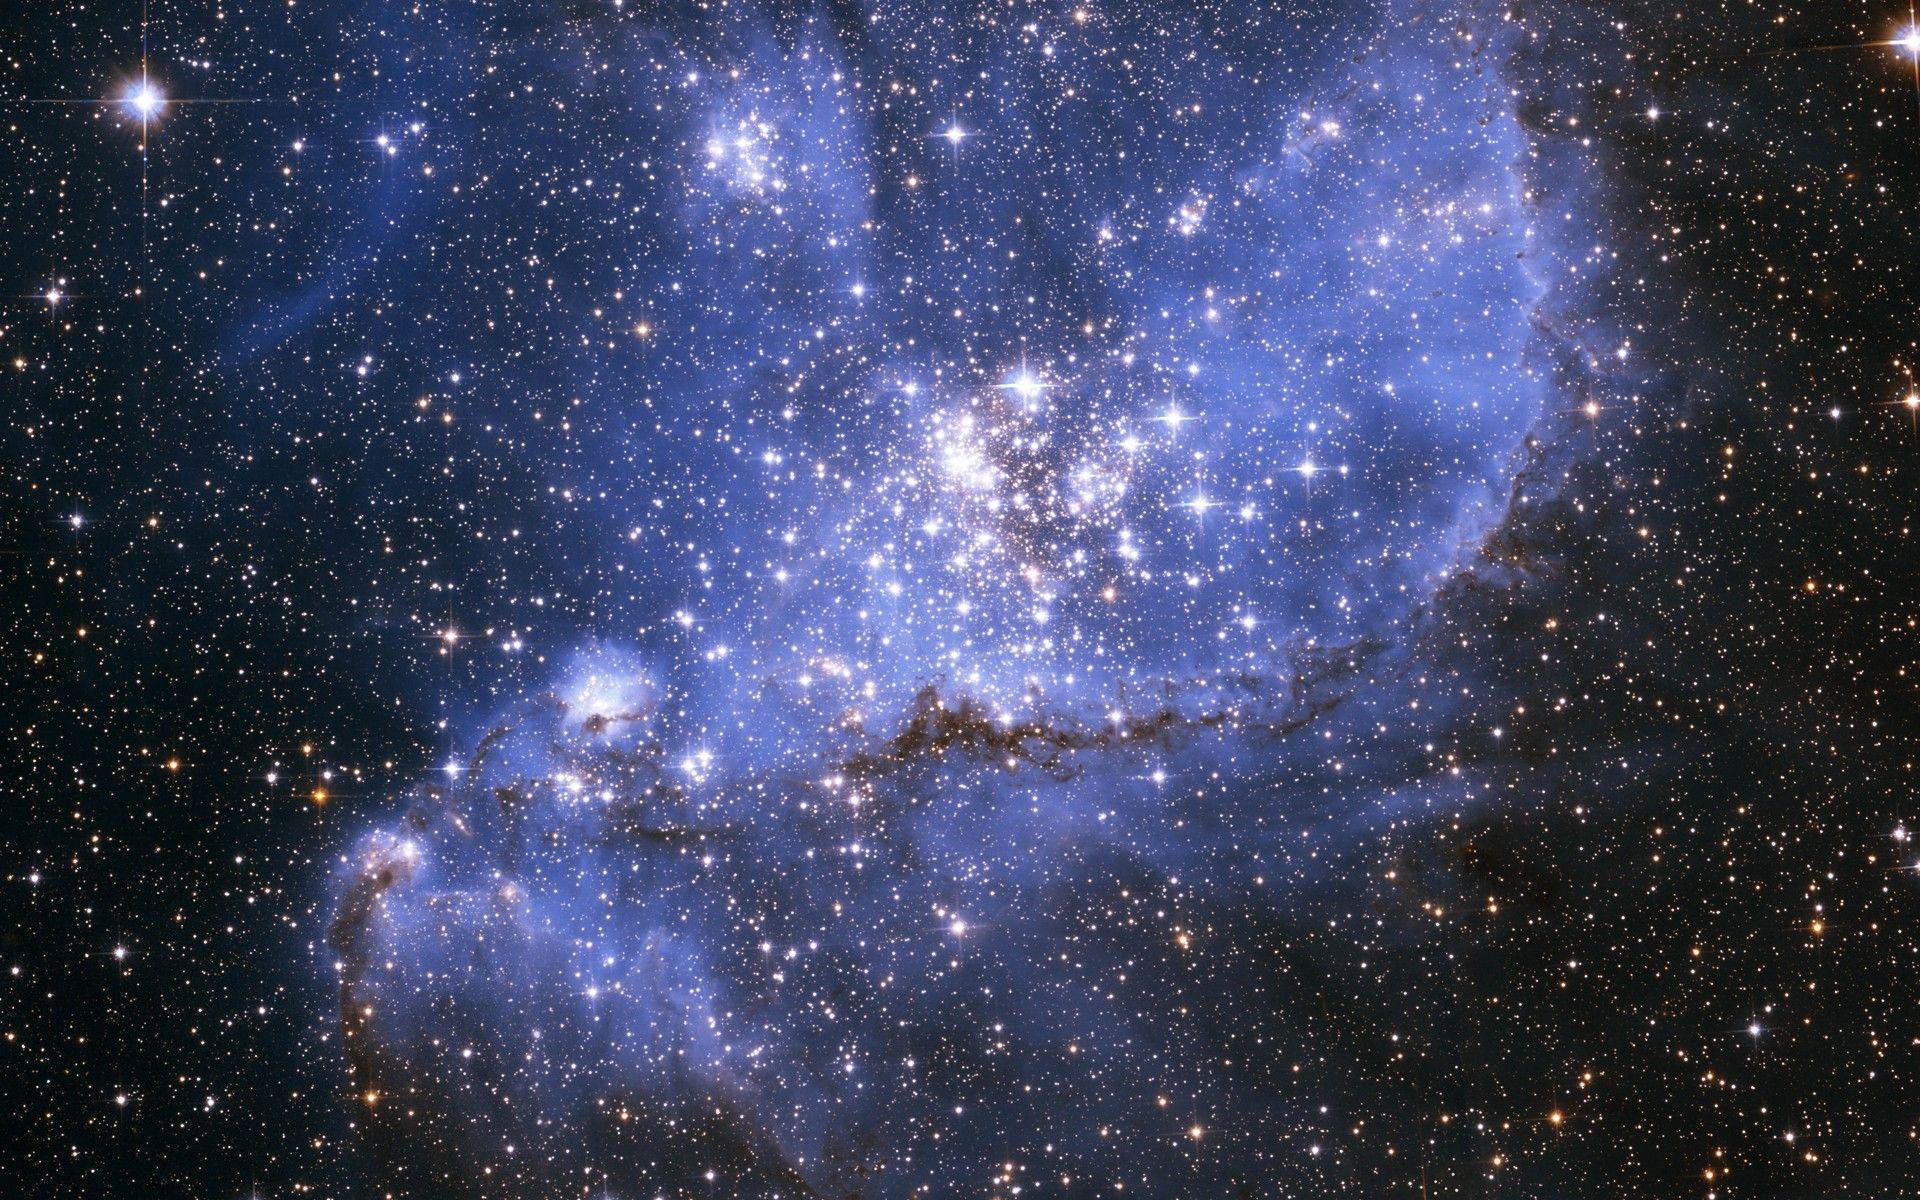 Wallpaper sparkly star outer space desktop image taken